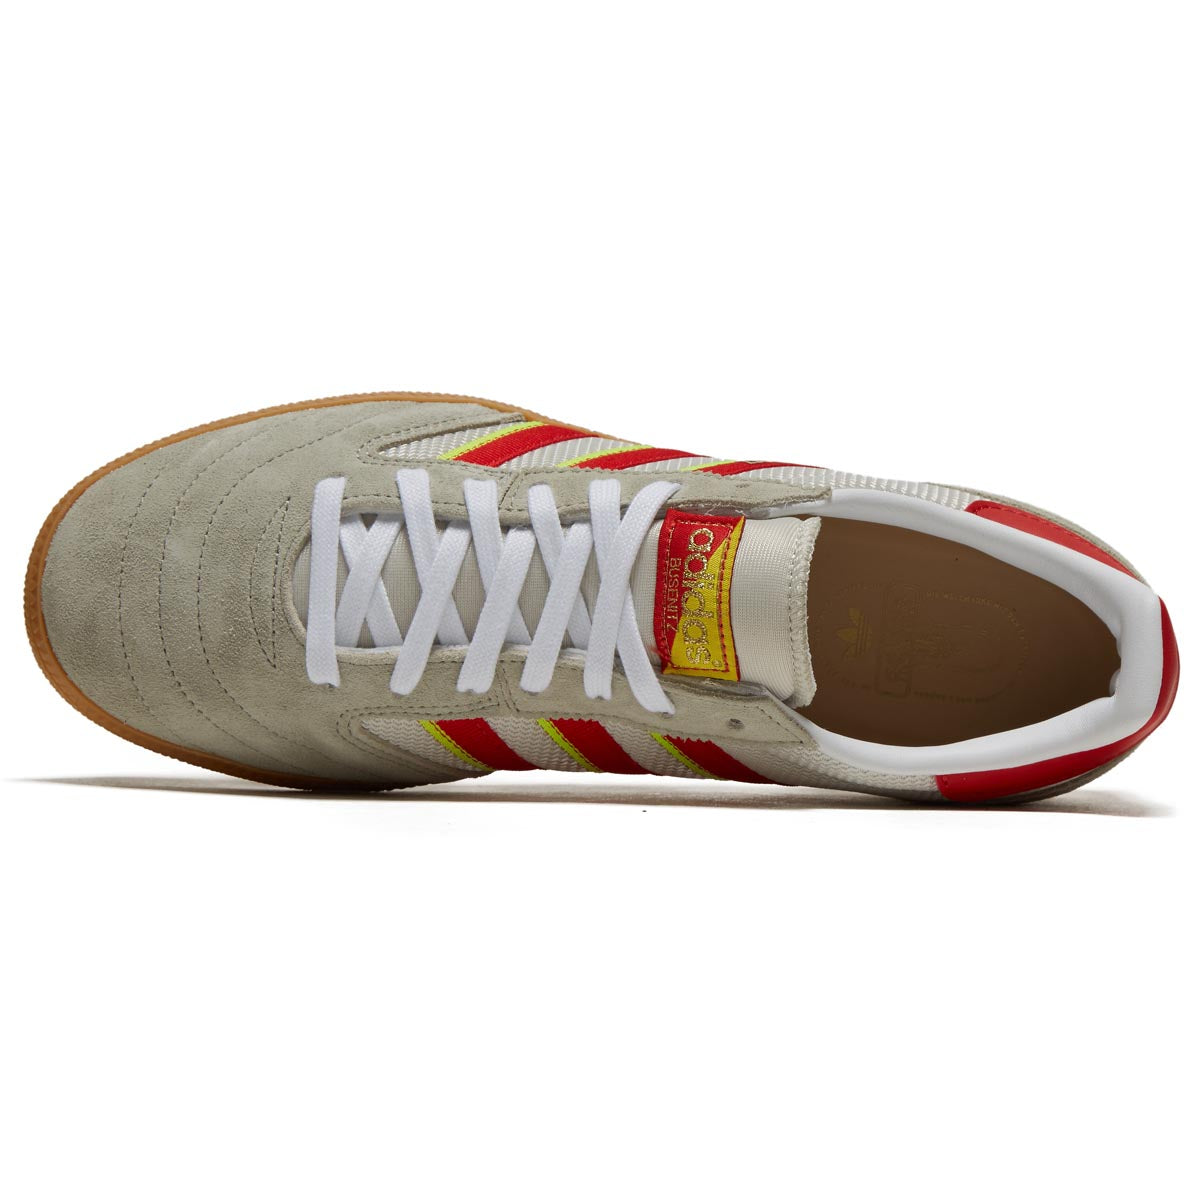 Adidas Busenitz Vintage Shoes - Feather Grey/Red/Orbit Grey image 3